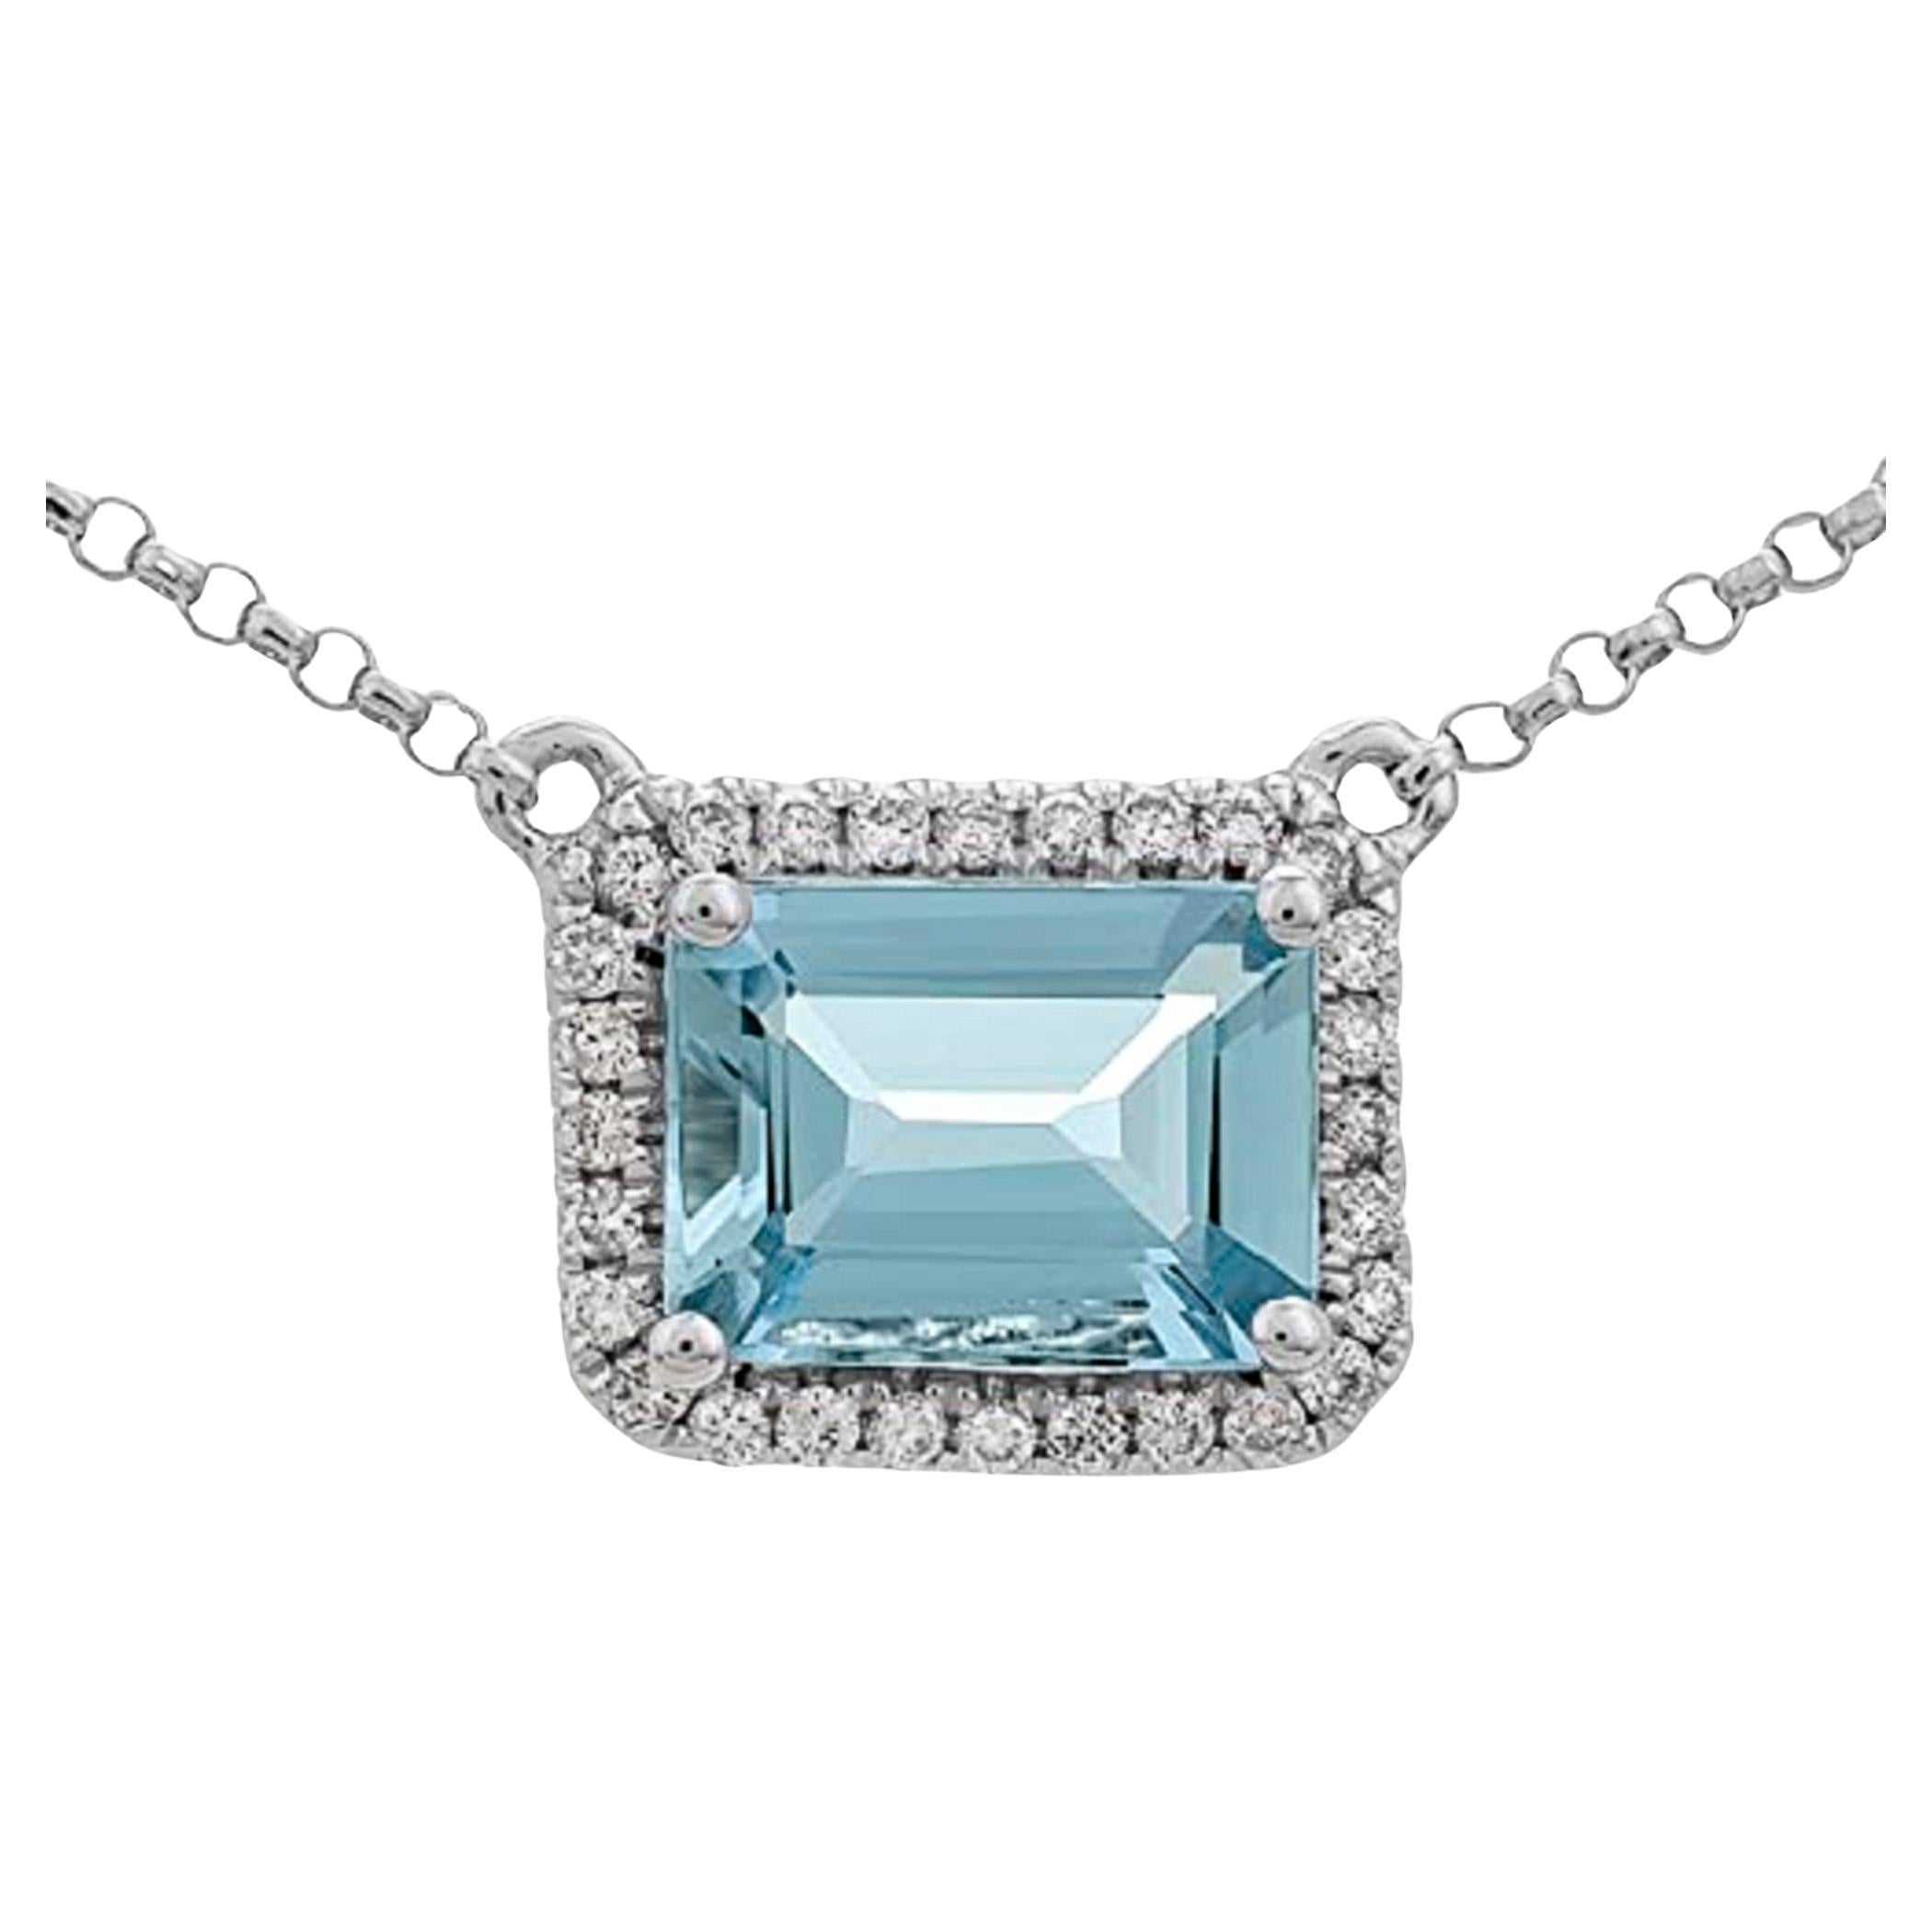 Gin & Grace 14K White Gold Genuine Aquamarine Pendant with Diamonds for women 